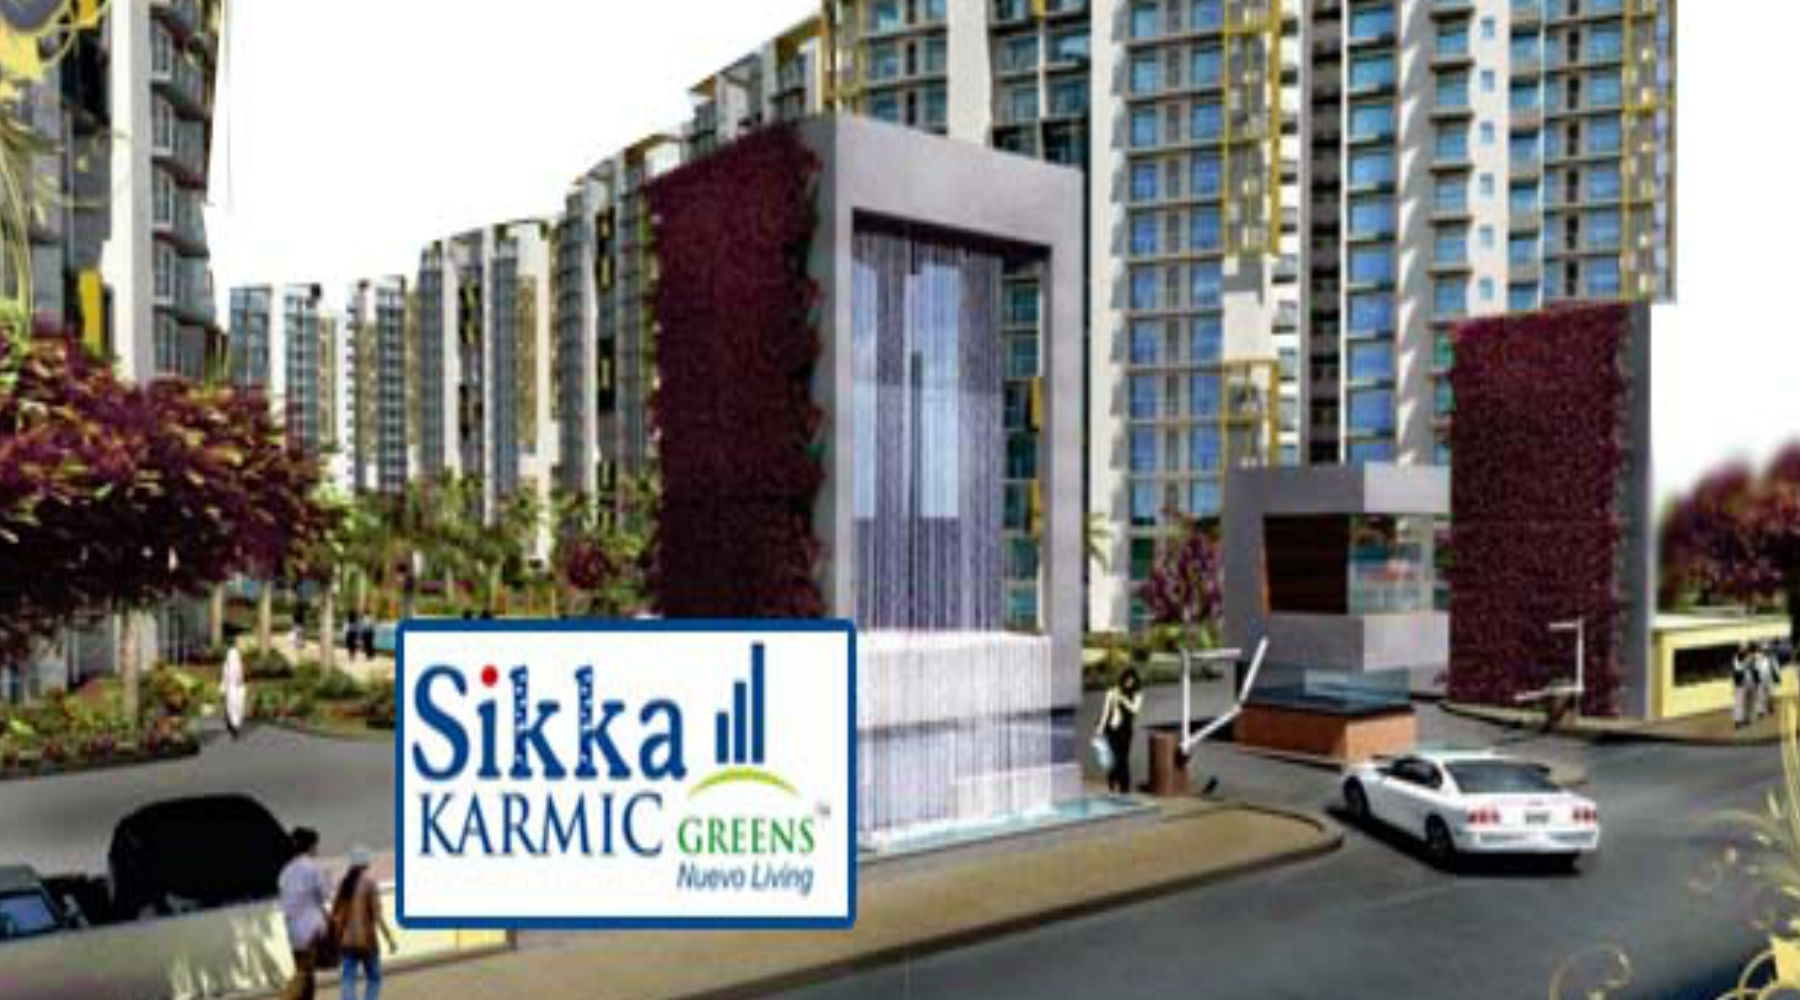 sikka-karmic-greens-flats